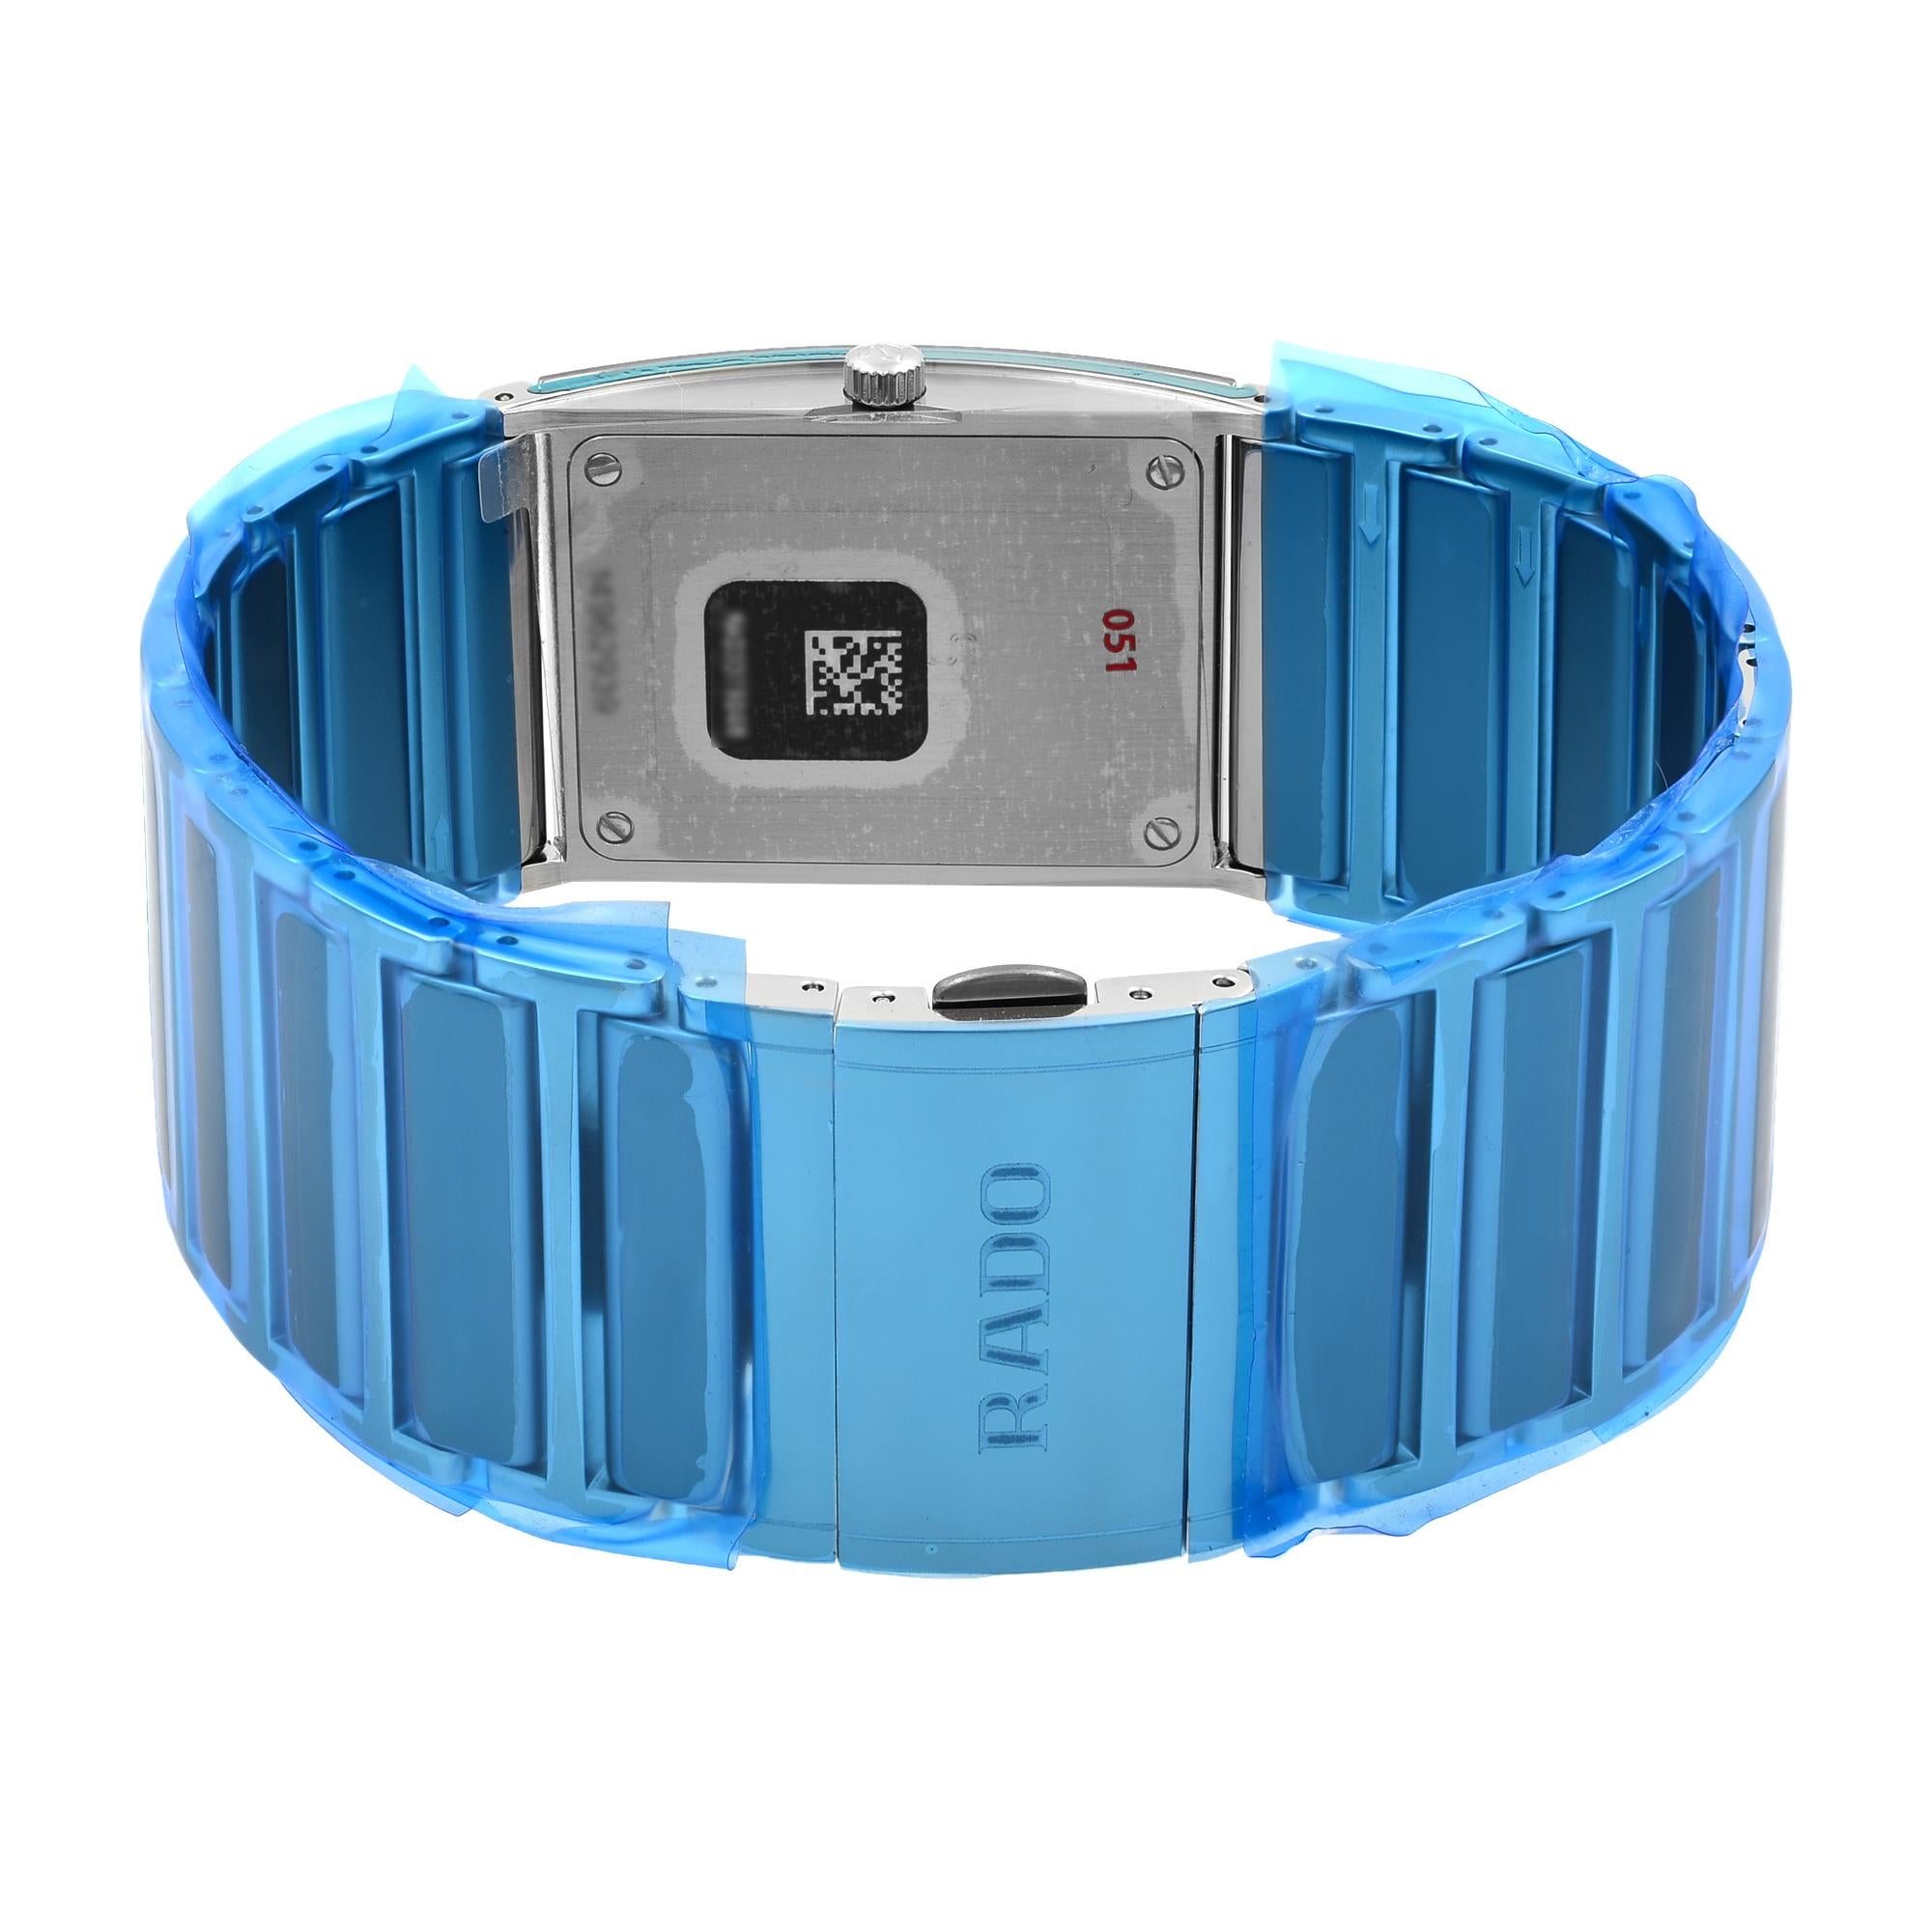 Rado Integral Stainless Steel Quartz Blue Dial Men's Watch R20745202 2